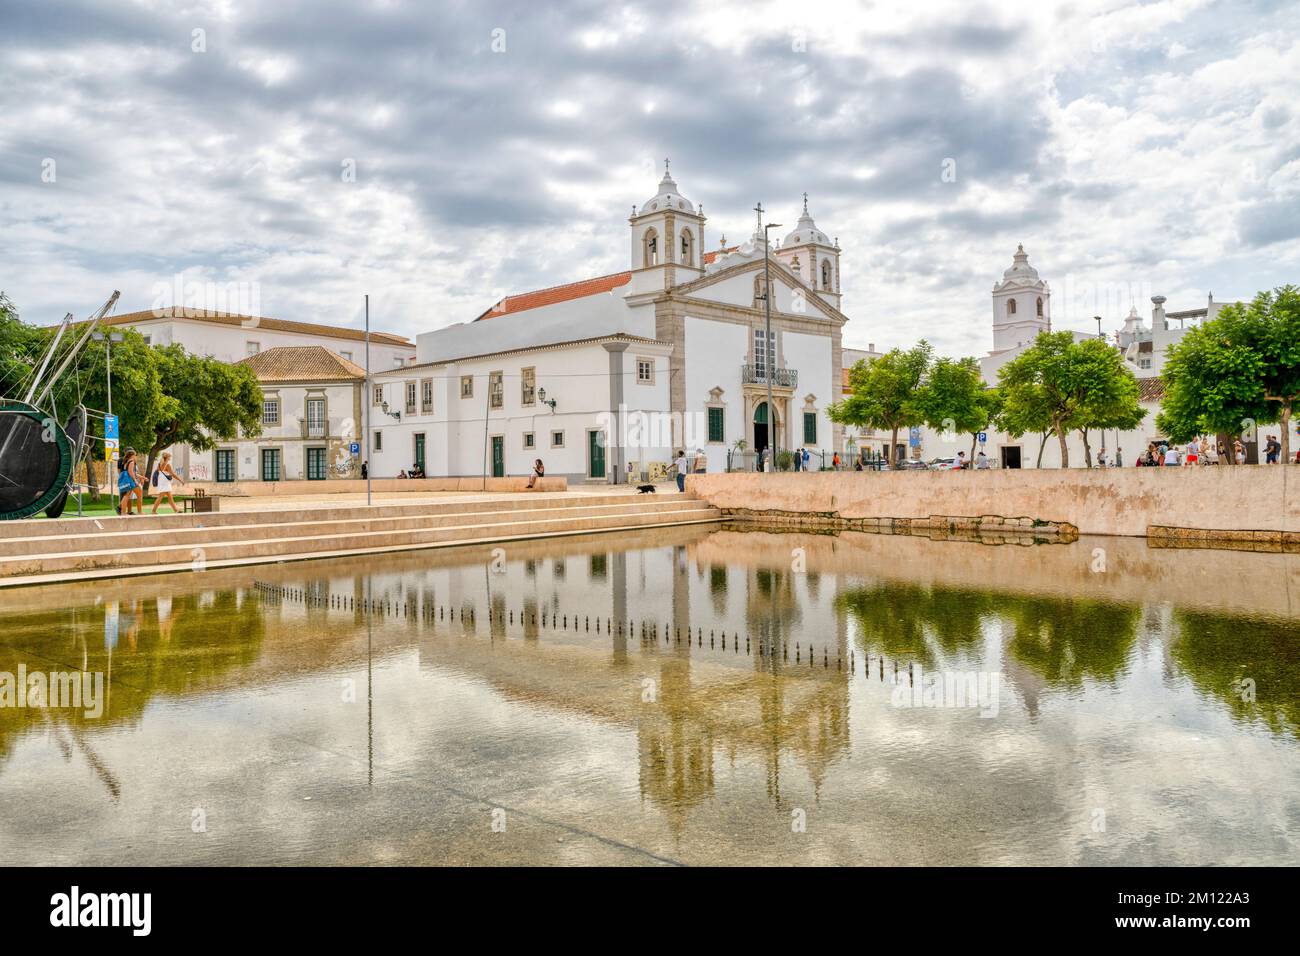 Portugal, Algarve, Lagos, view of the church Santa Maria (Igreja de Santa Maria)in town Stock Photo